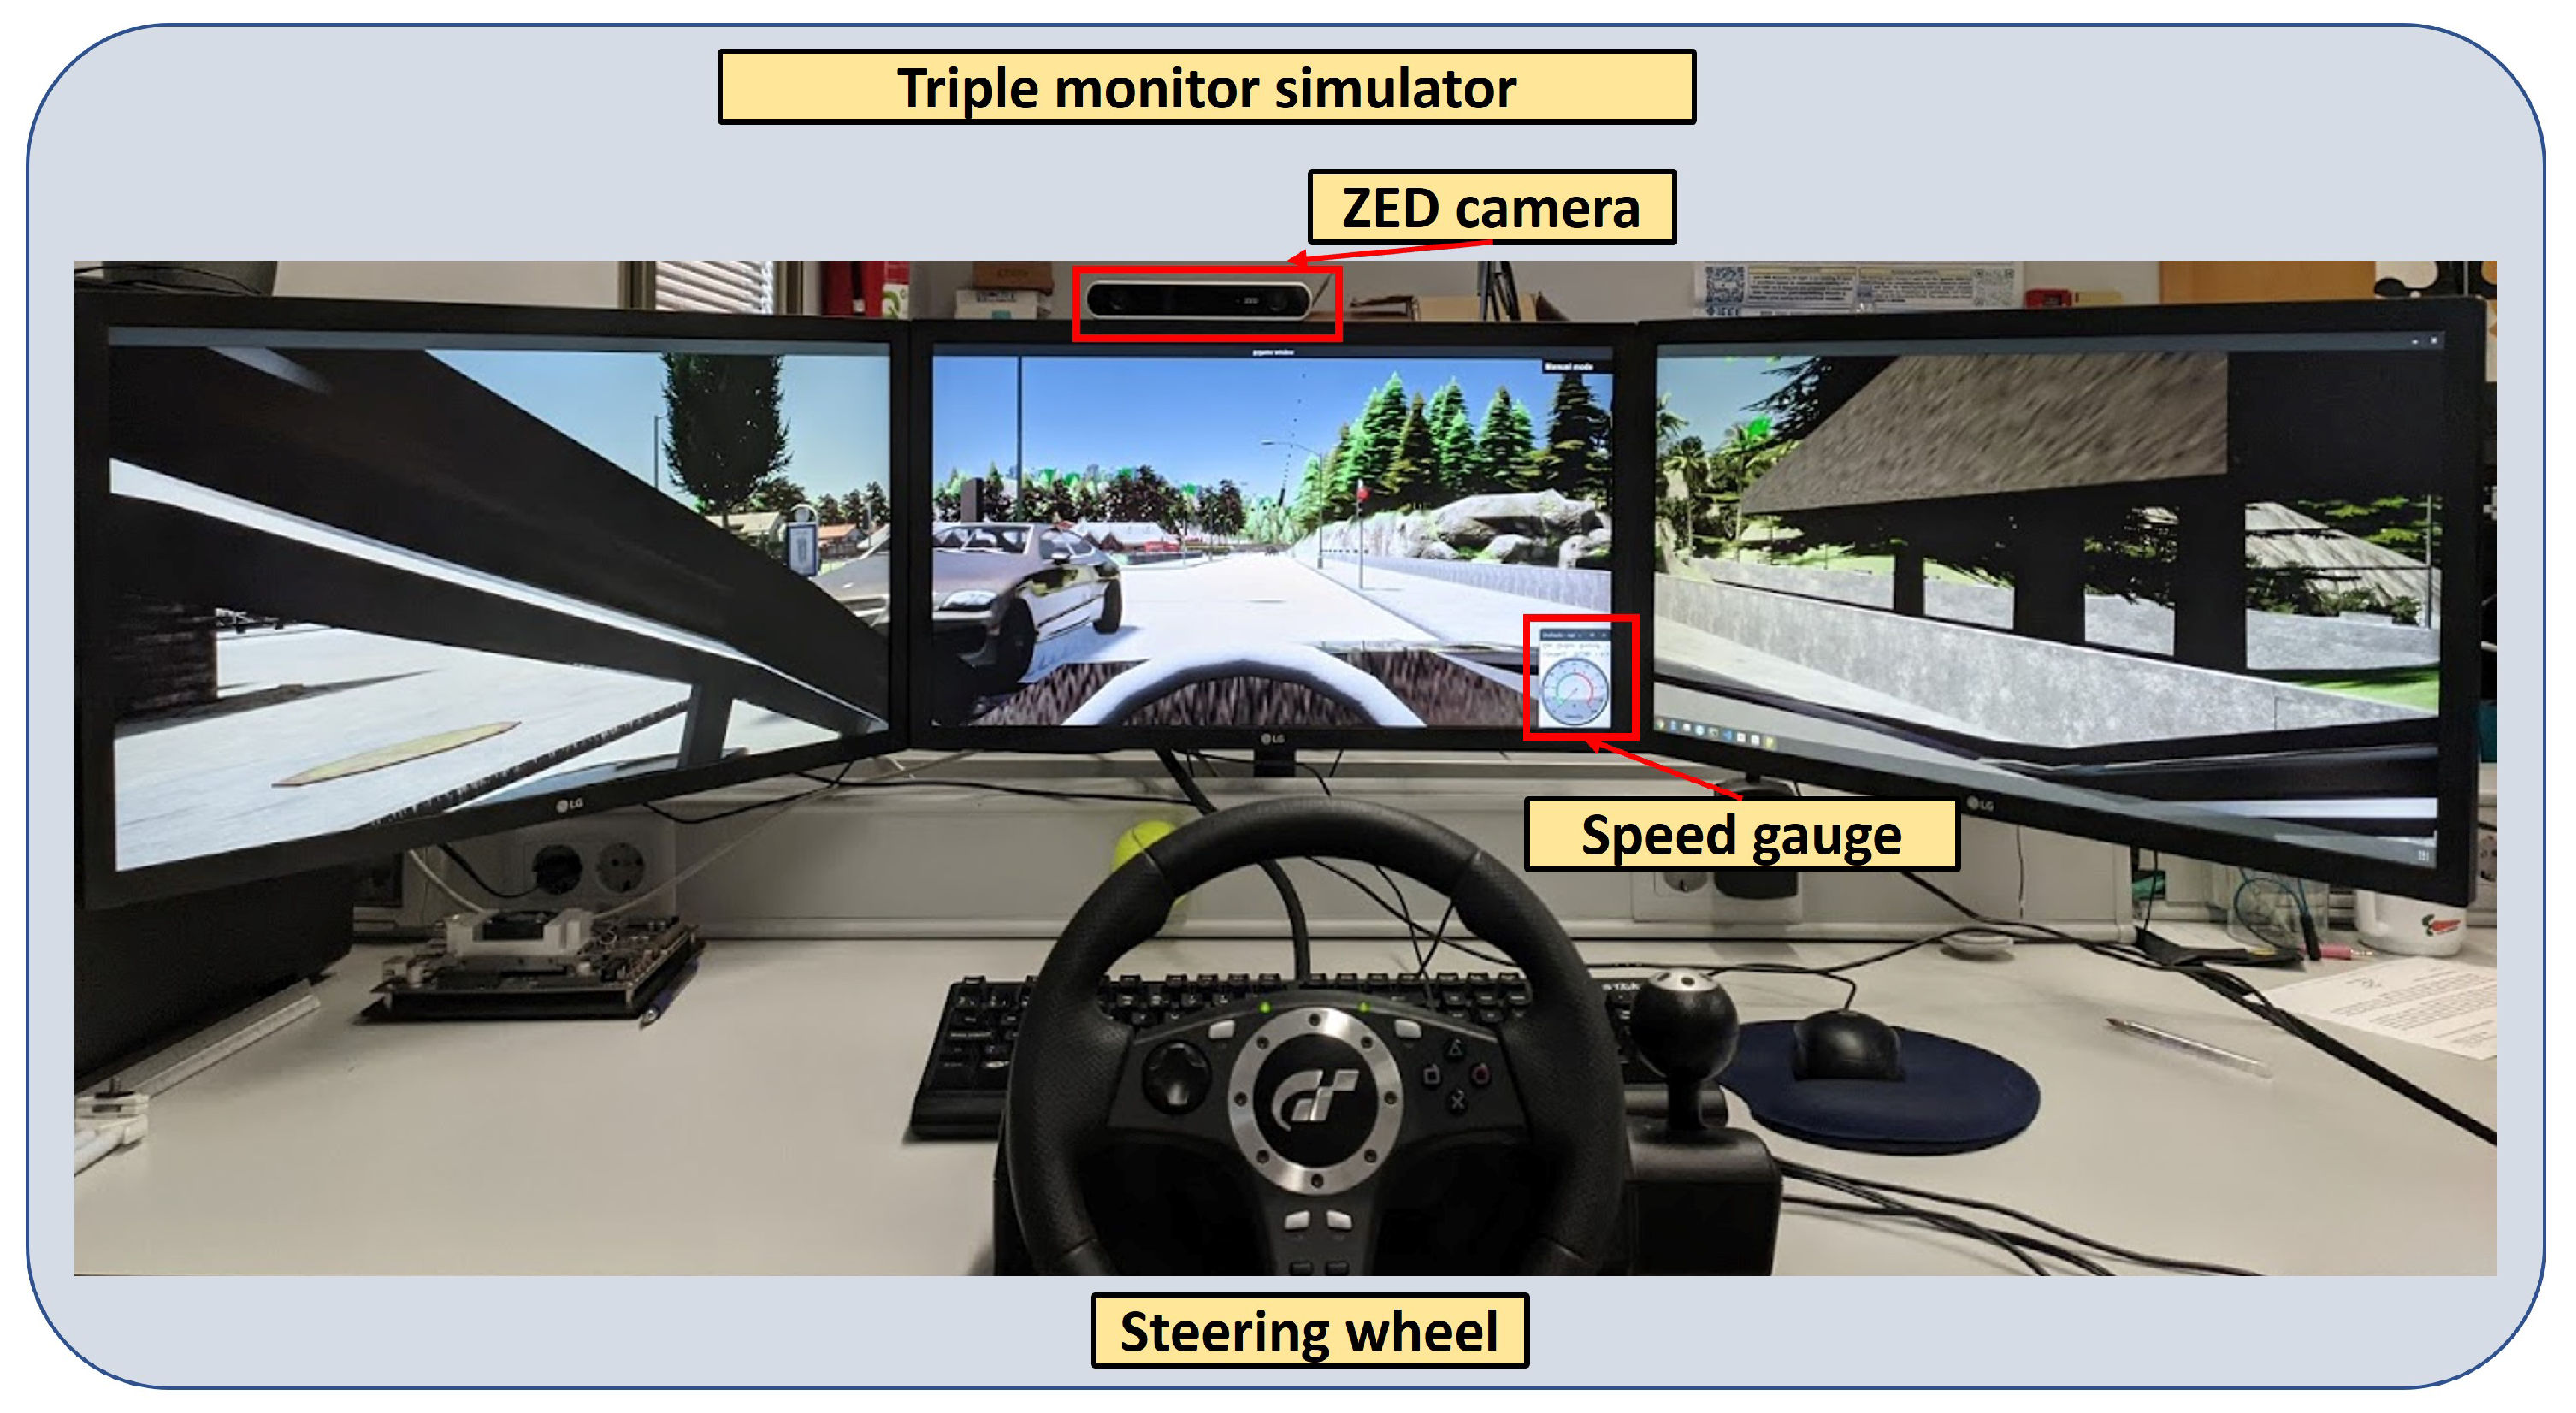 Snapshot from the CARLA driving simulator